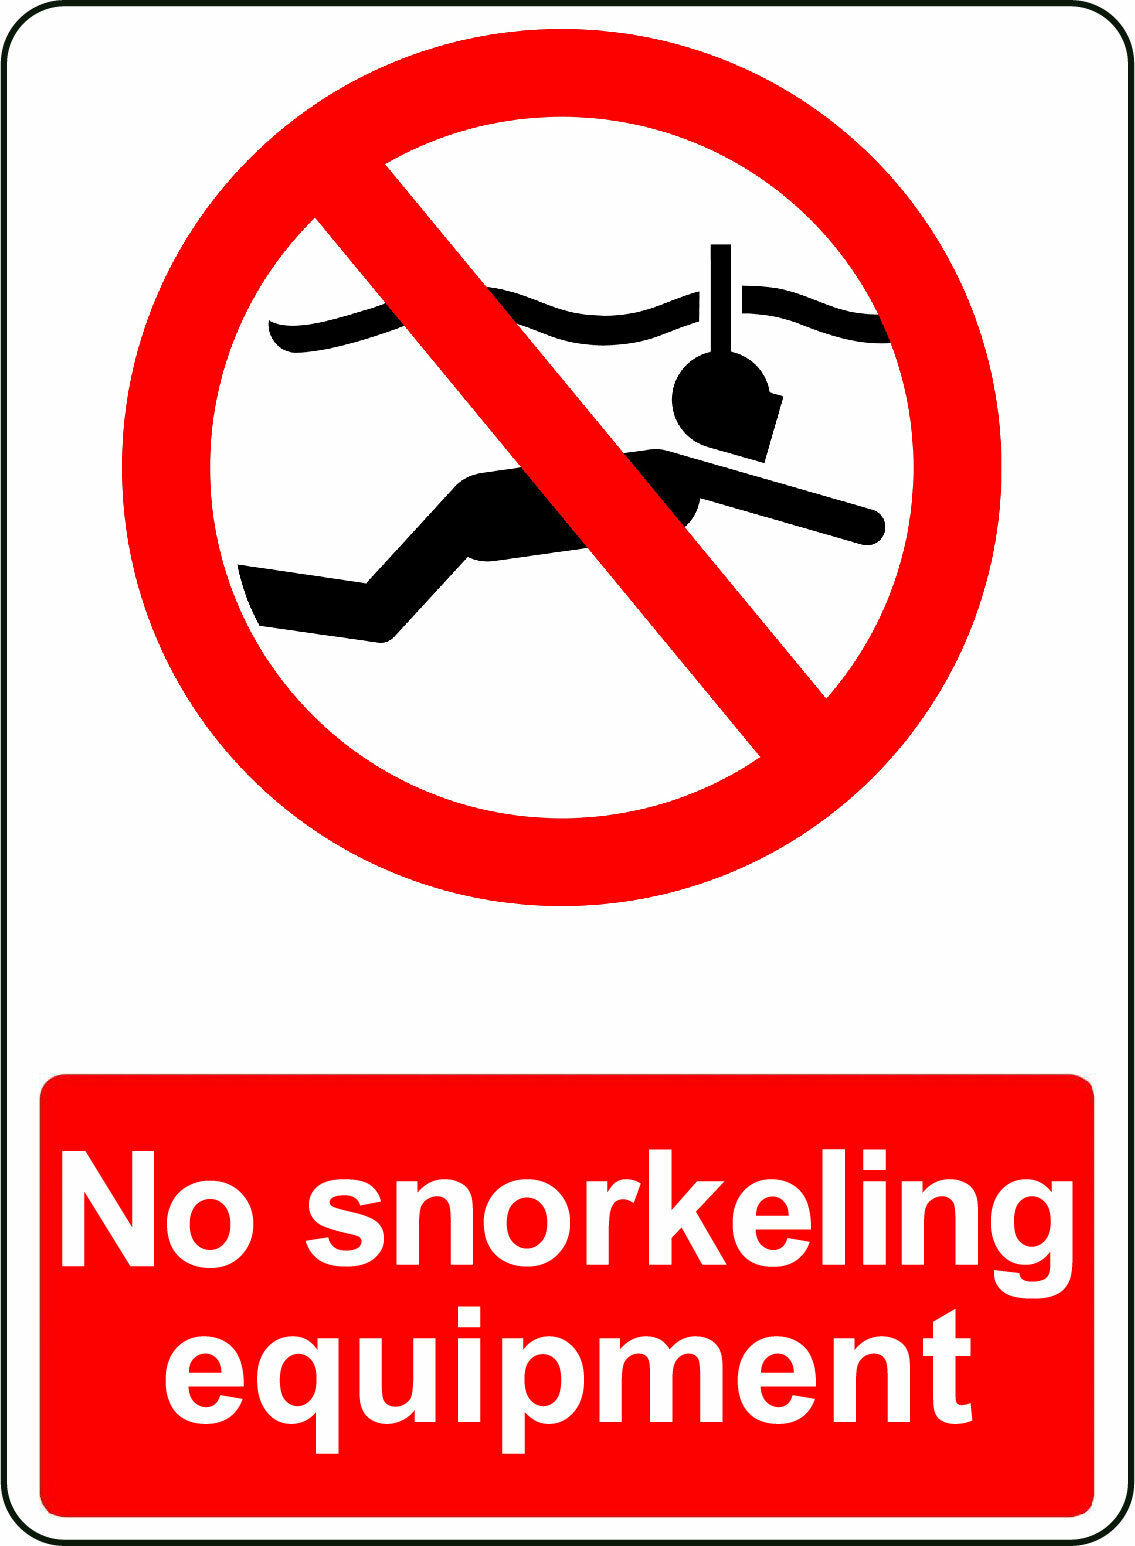 No Snorkeling Equipment Osha Decal Safety Sign Sticker 3M Usa Made